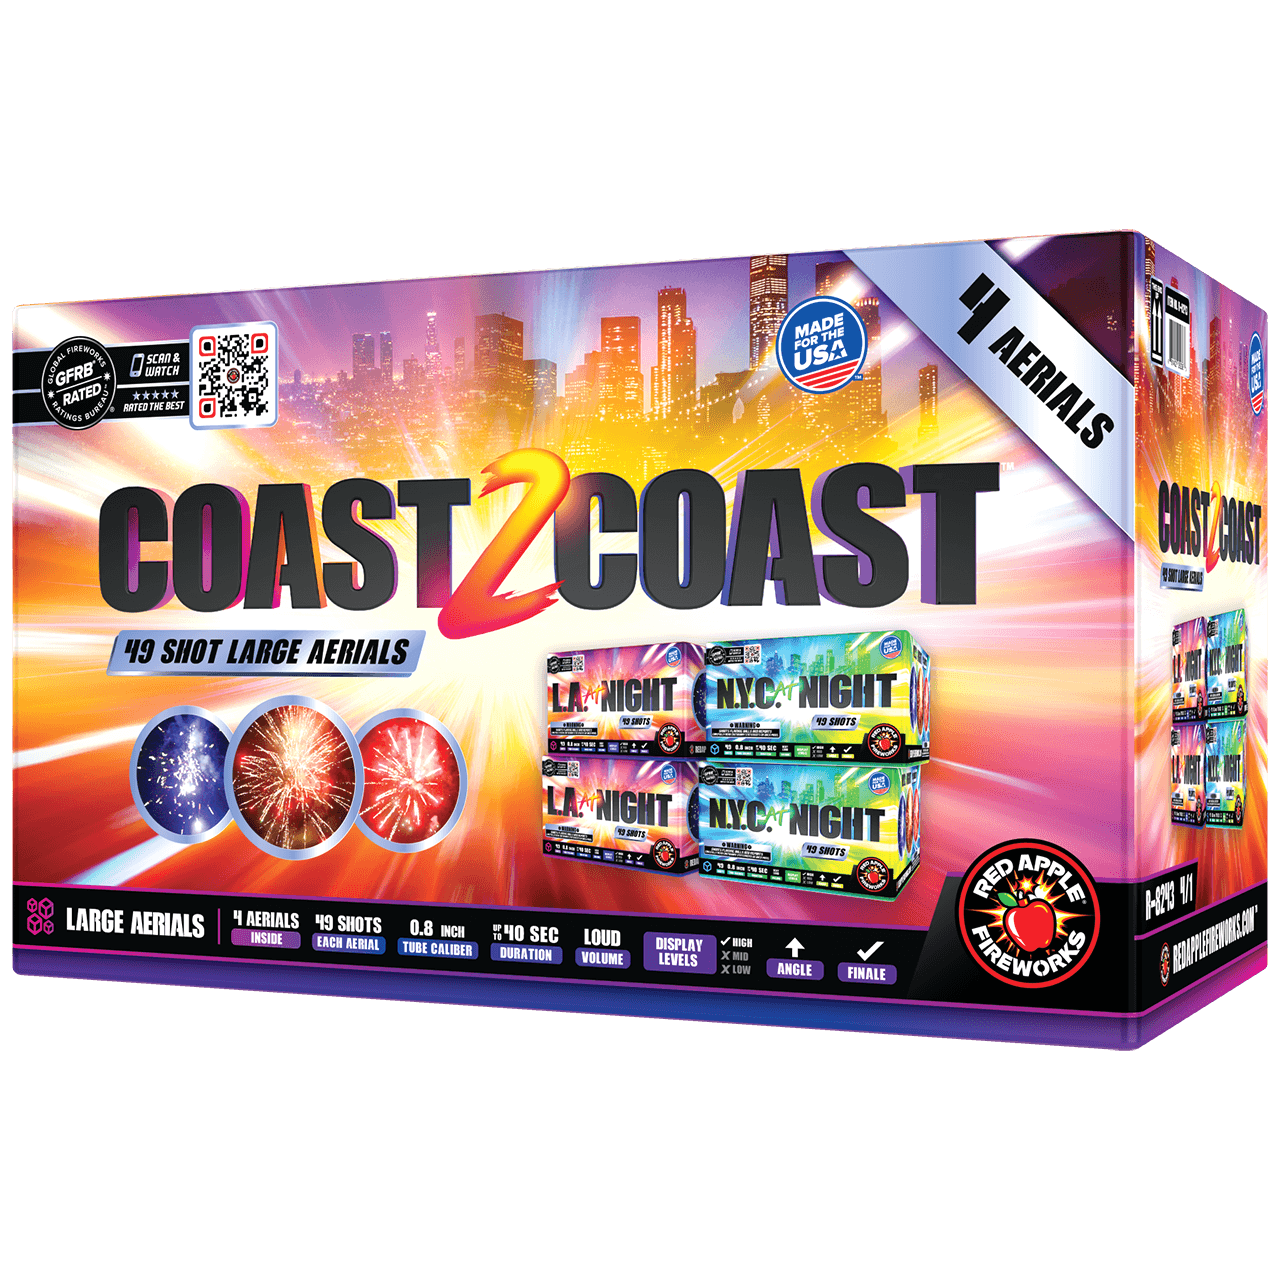 Buy Coast 2 Coast™ 49-Shots Large Aerial Fireworks Online – Red 